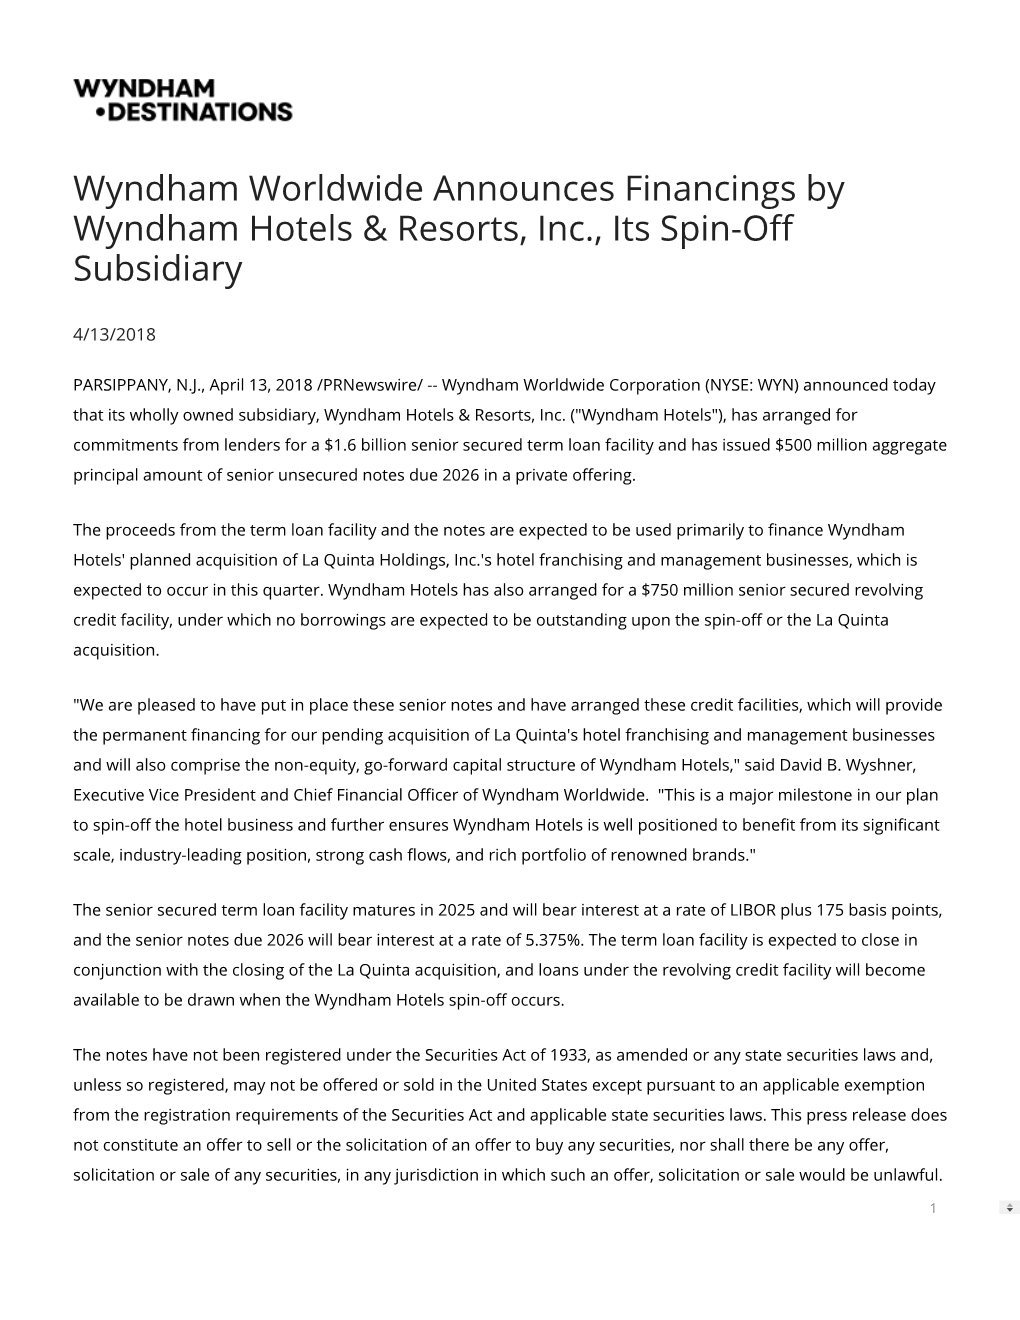 Wyndham Worldwide Announces Financings by Wyndham Hotels & Resorts, Inc., Its Spin-O� Subsidiary